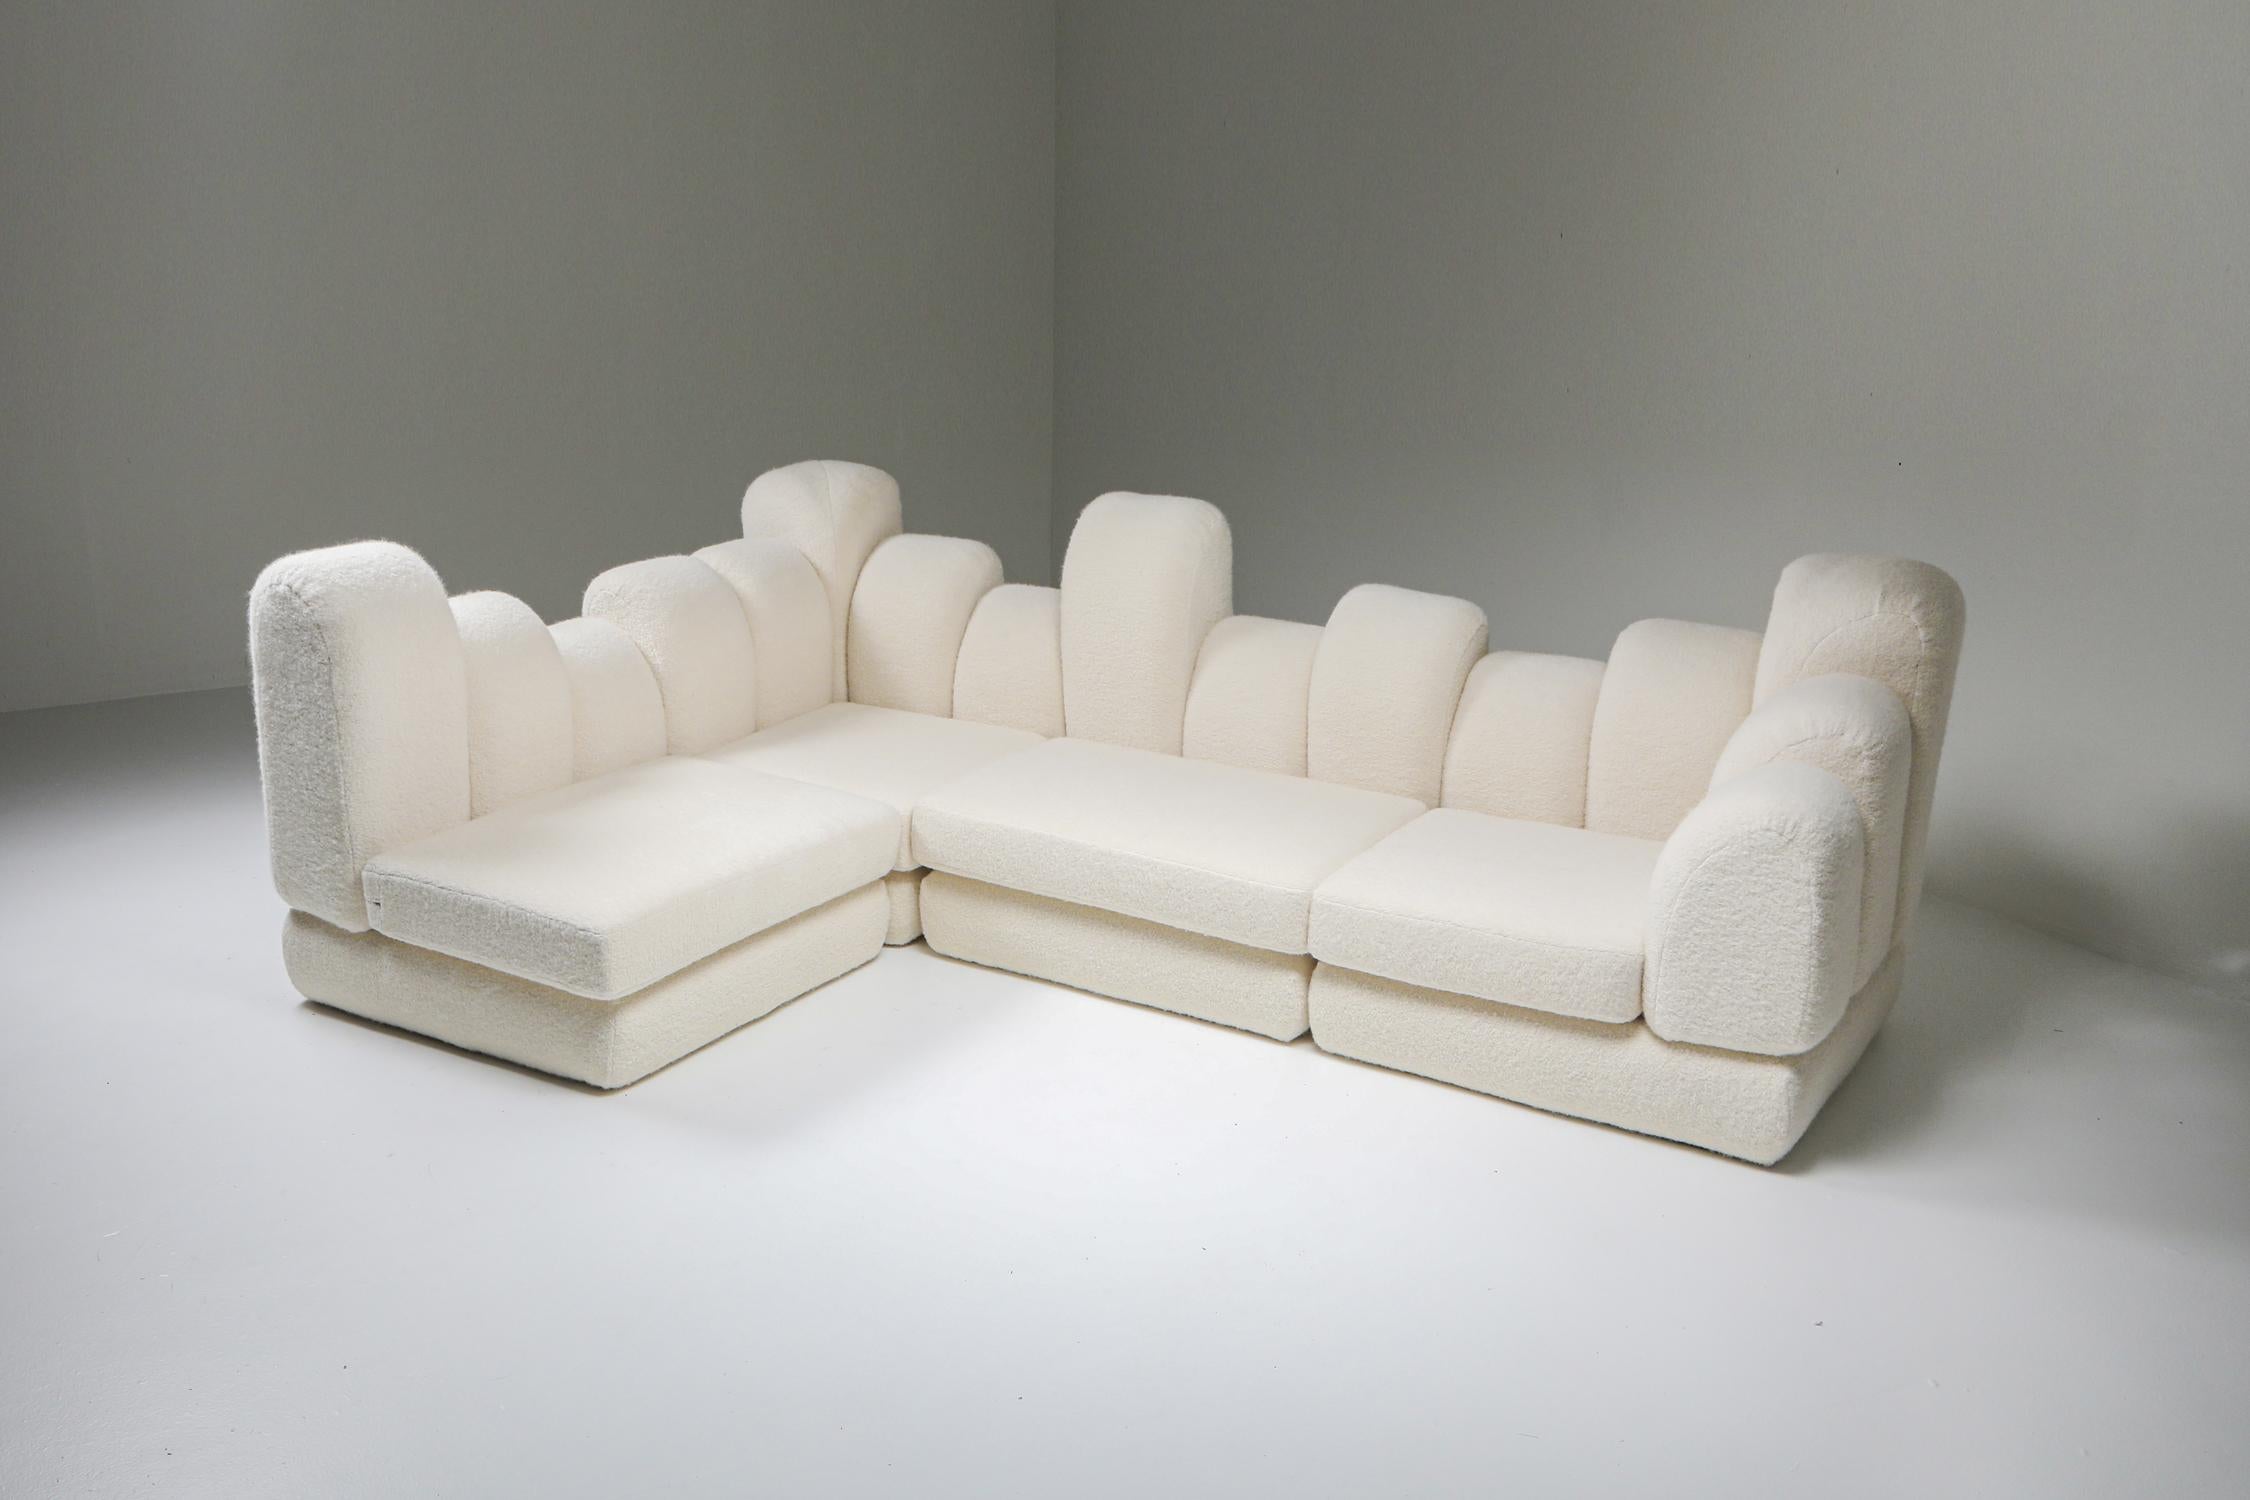 Late 20th Century Hans Hopfer 'Dromadaire' Sectional Sofa in Pierre Frey Wool, Roche Bobois, 1974